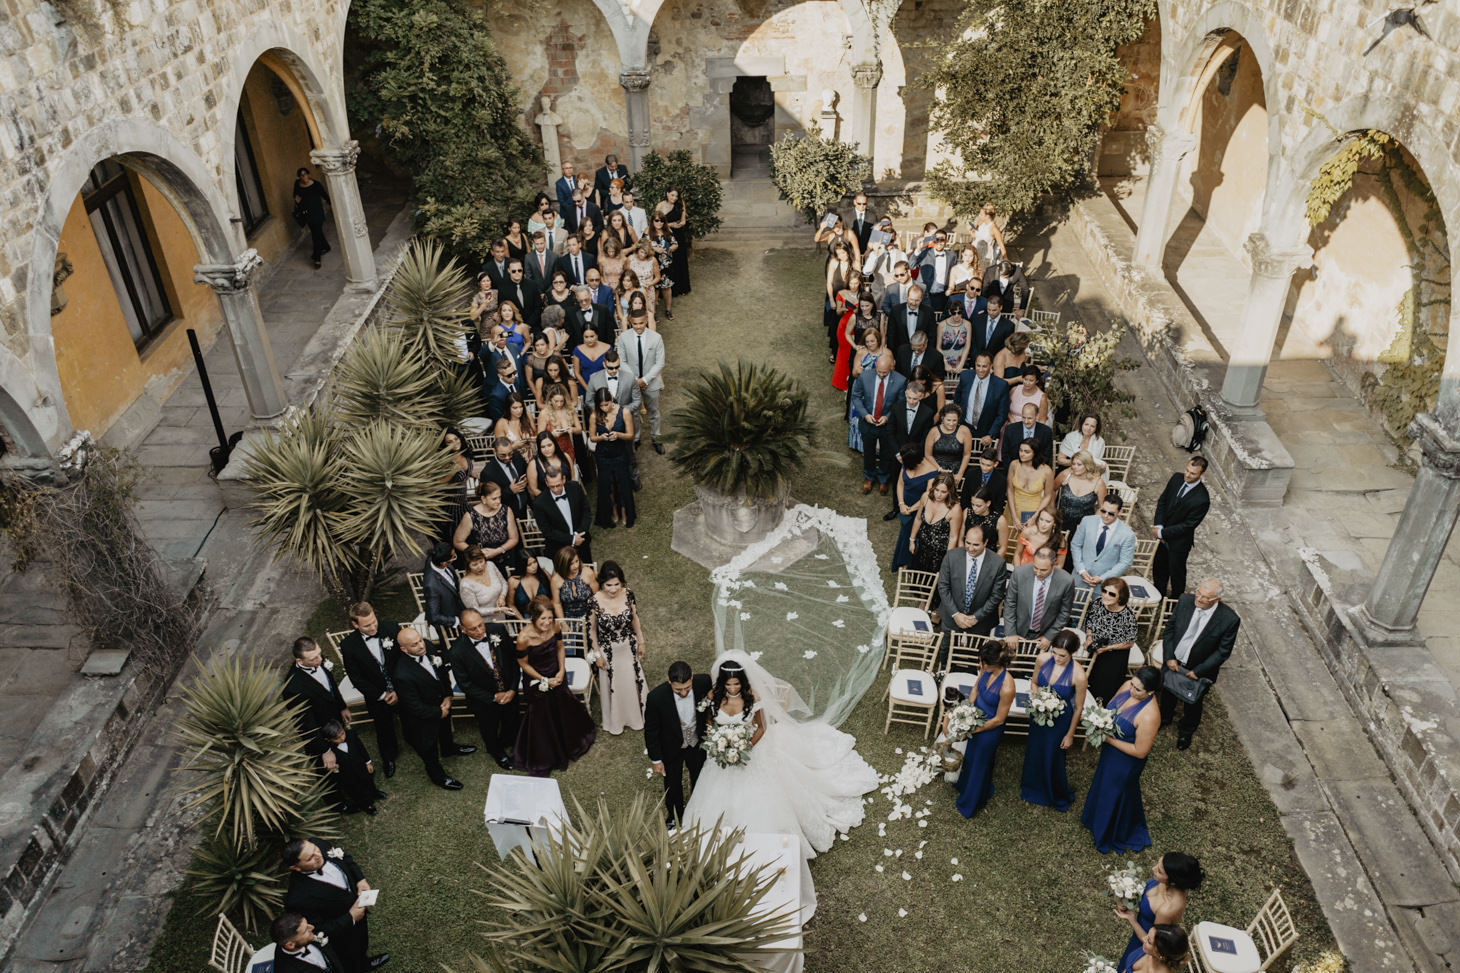 Protestant wedding at Vincigliata